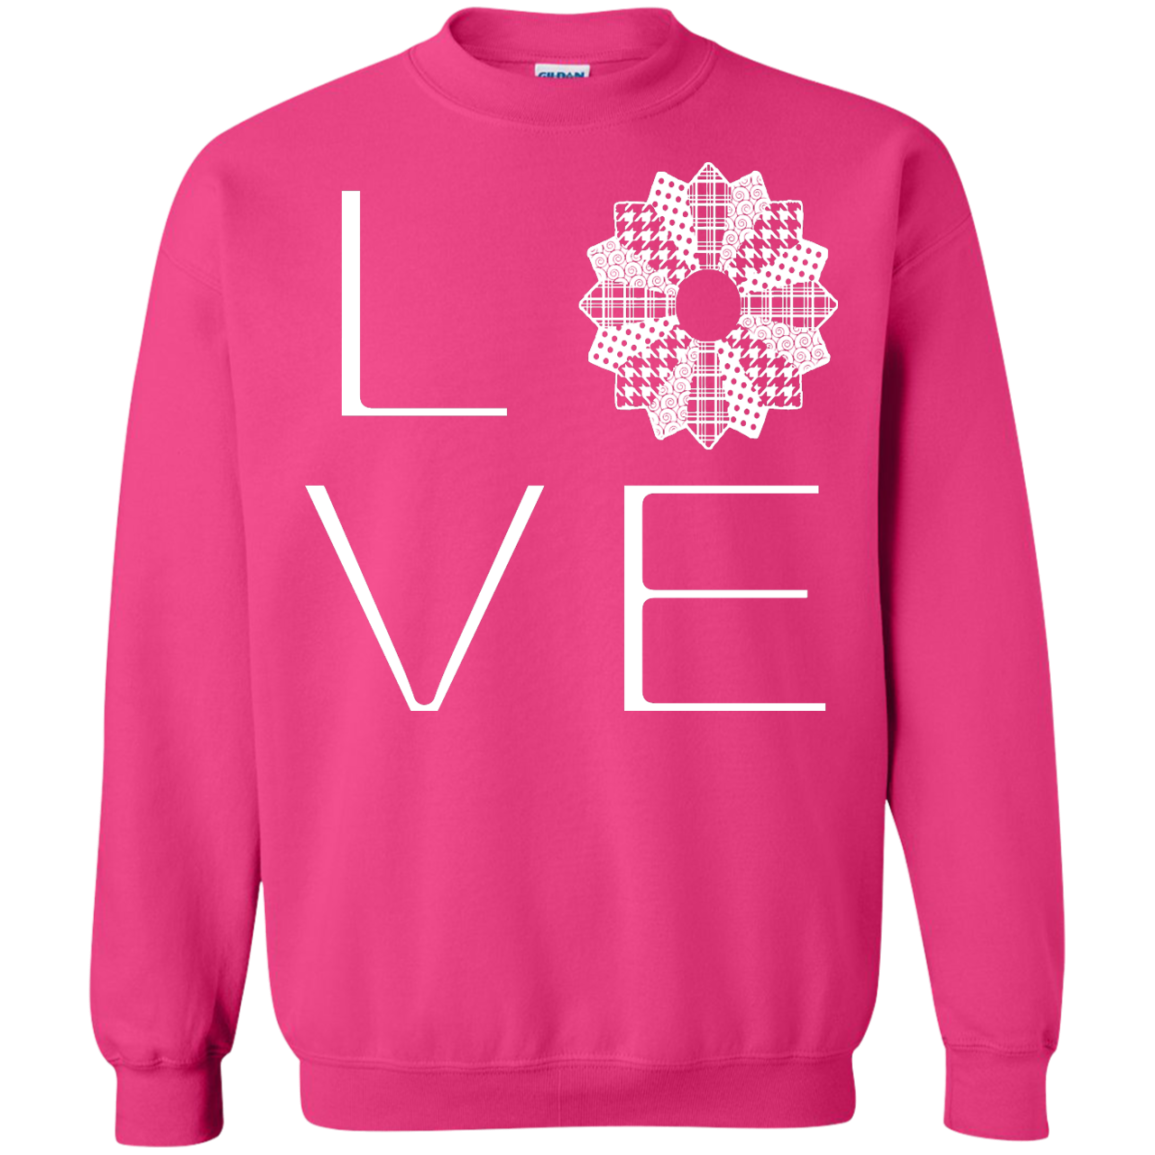 LOVE Quilting Crewneck Sweatshirts - Crafter4Life - 11